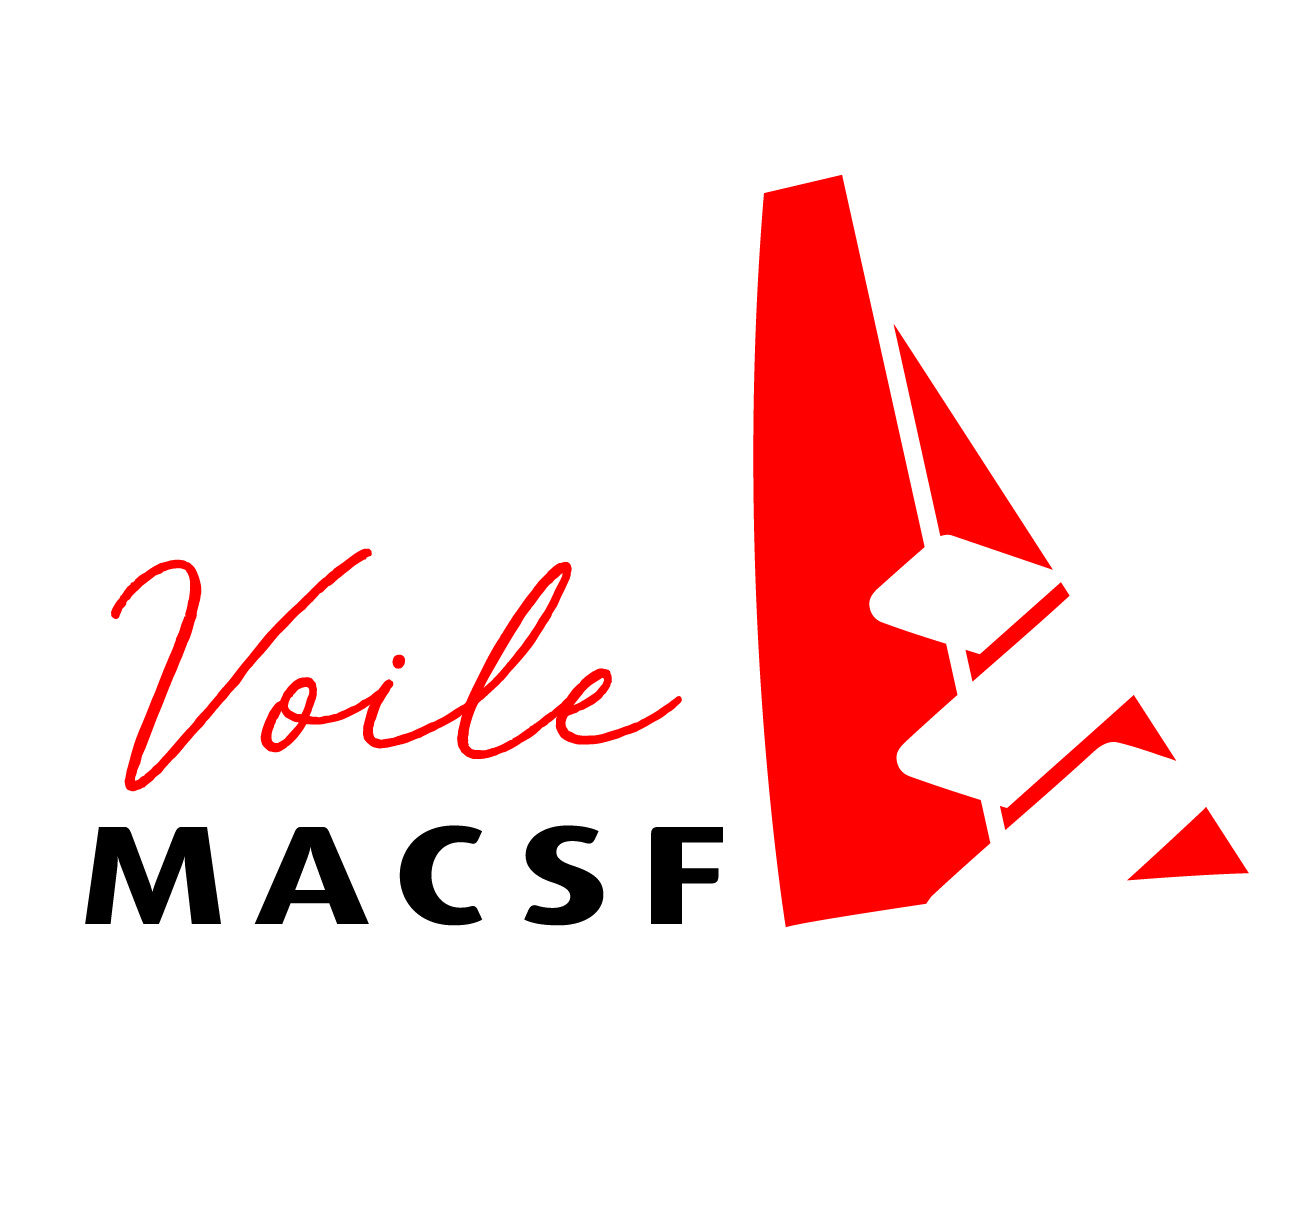 Voile MACSF